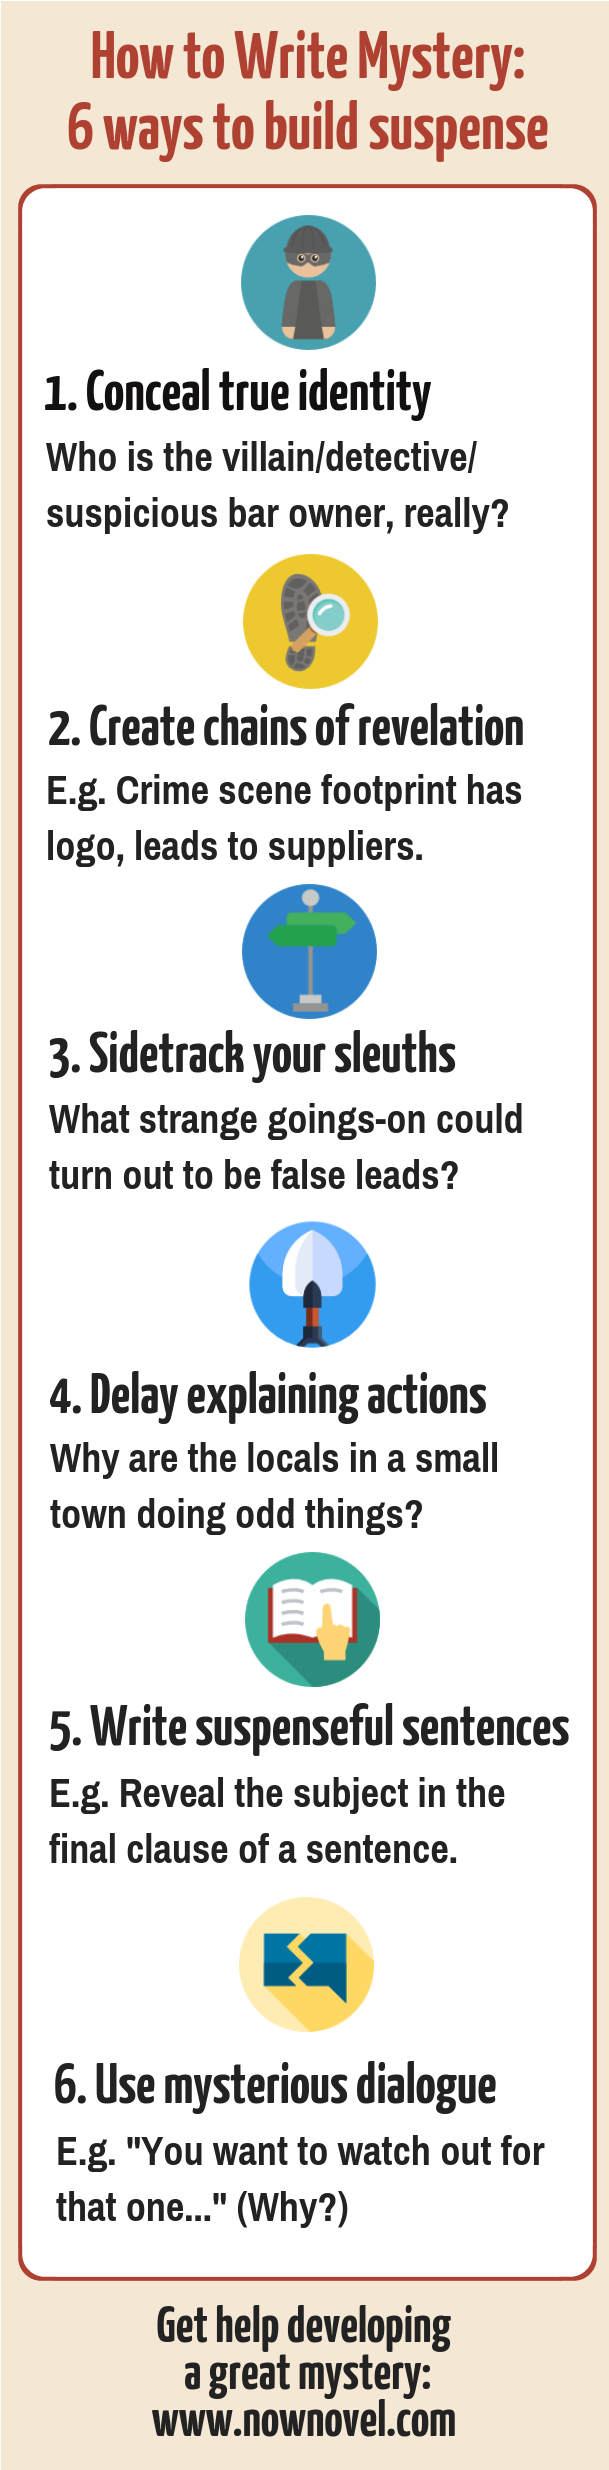 Suspense Writing: 5 Top Tips, The Blog